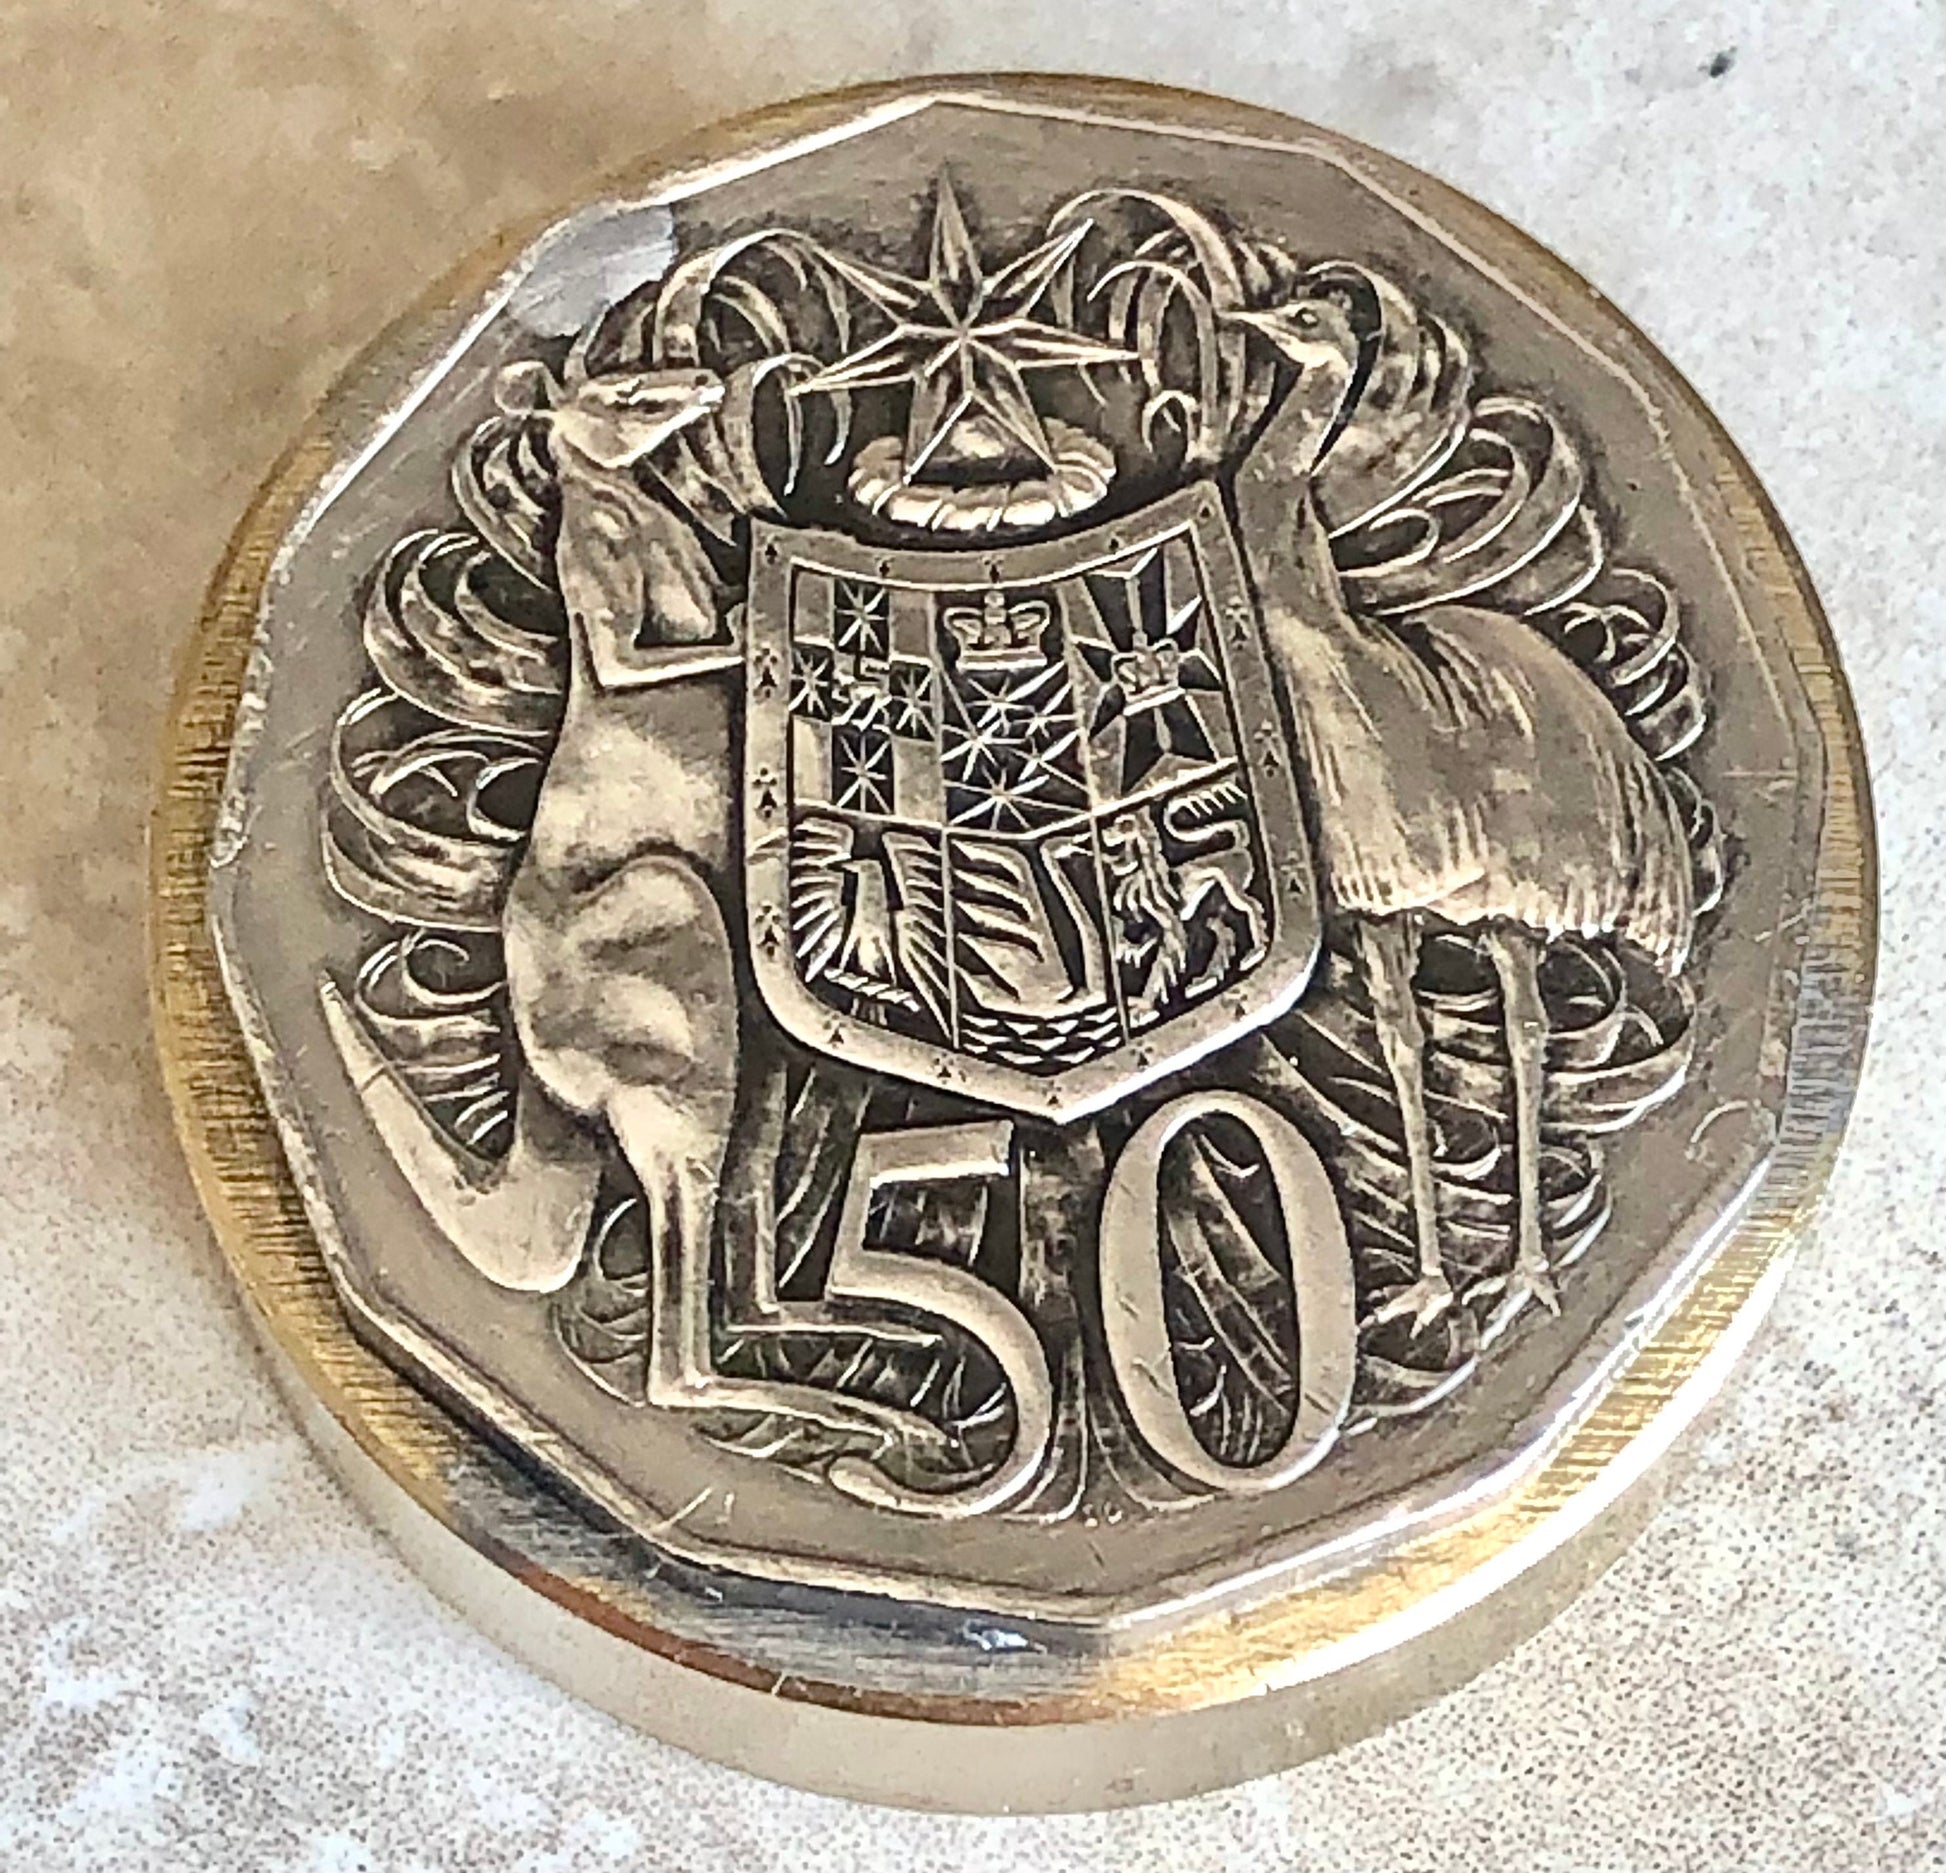 Australia Coin Pillbox Australian Fifty Cents- Vintage Antique Stash Snuff Box, Box, Keepsake, Men's Gift, Jewelry, World Coin Collector